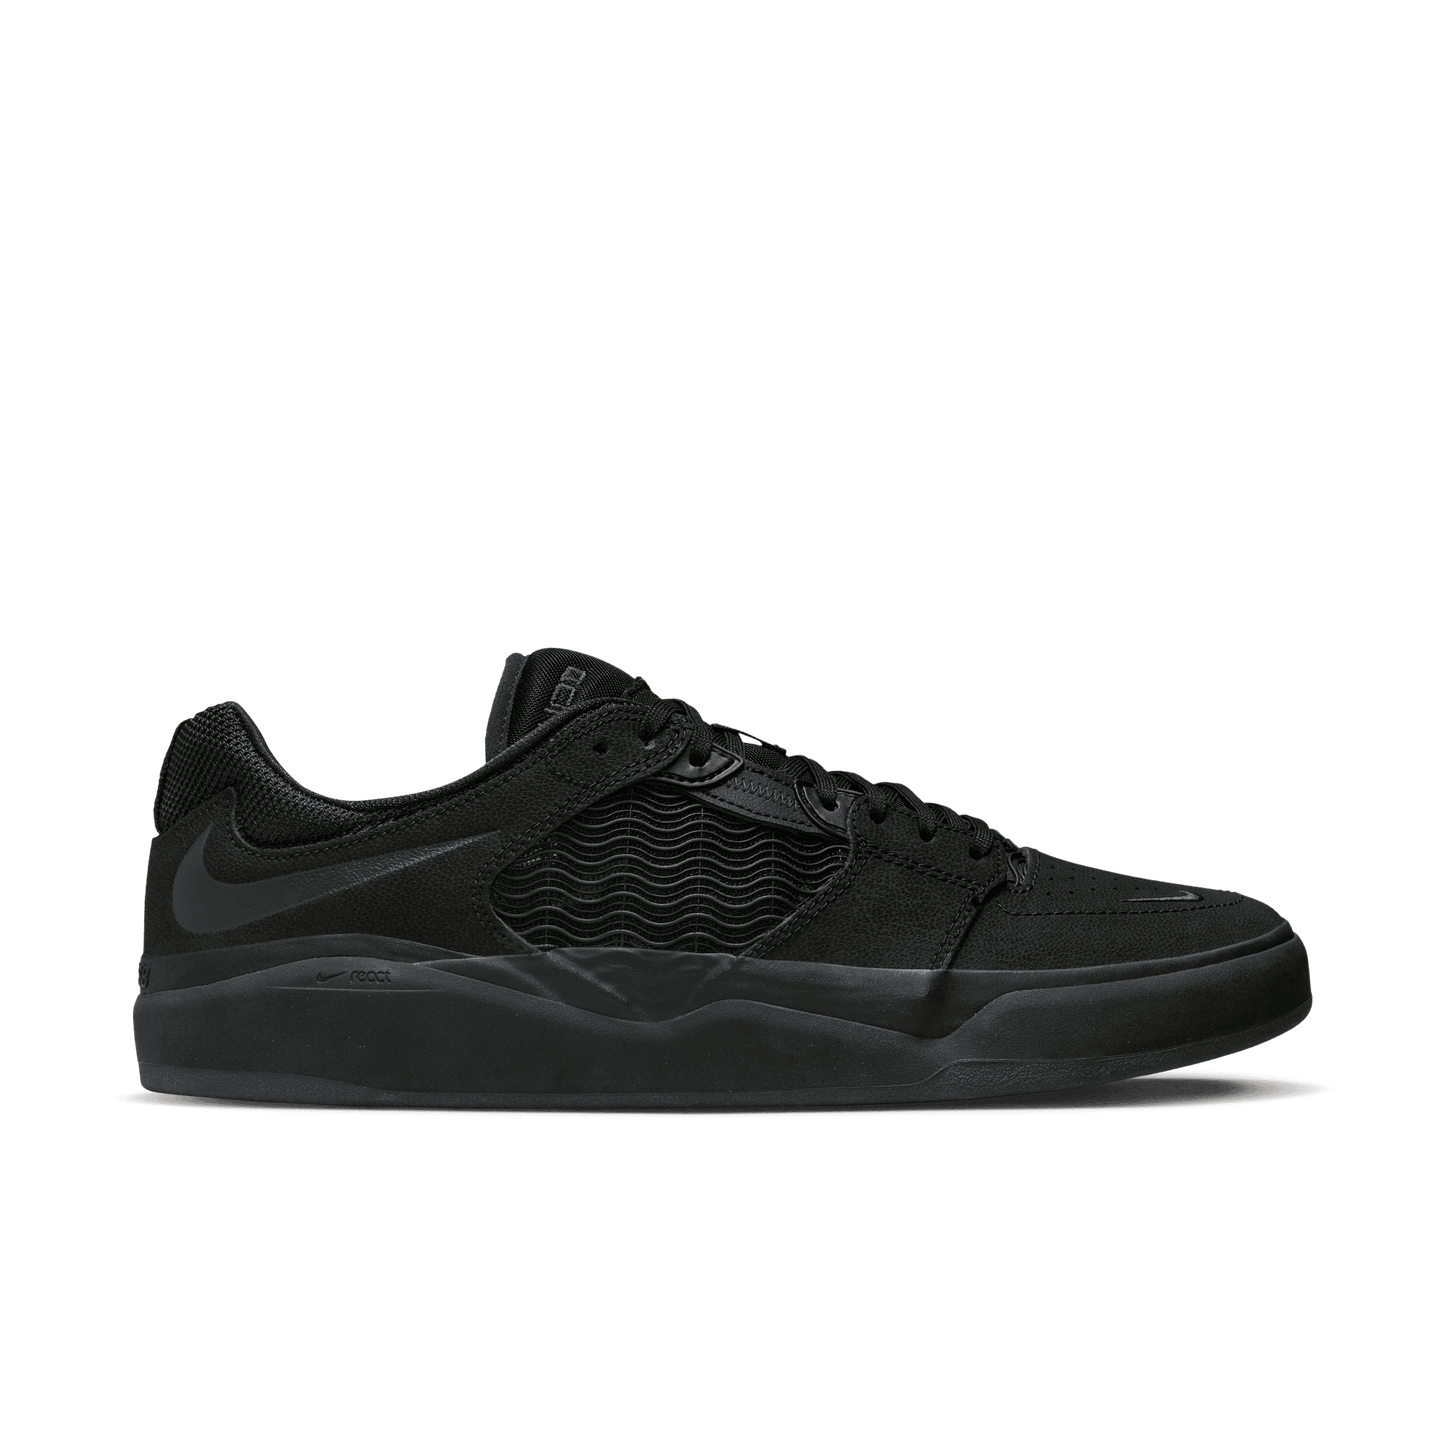 Nike SB Ishod Wair Premium black black black black